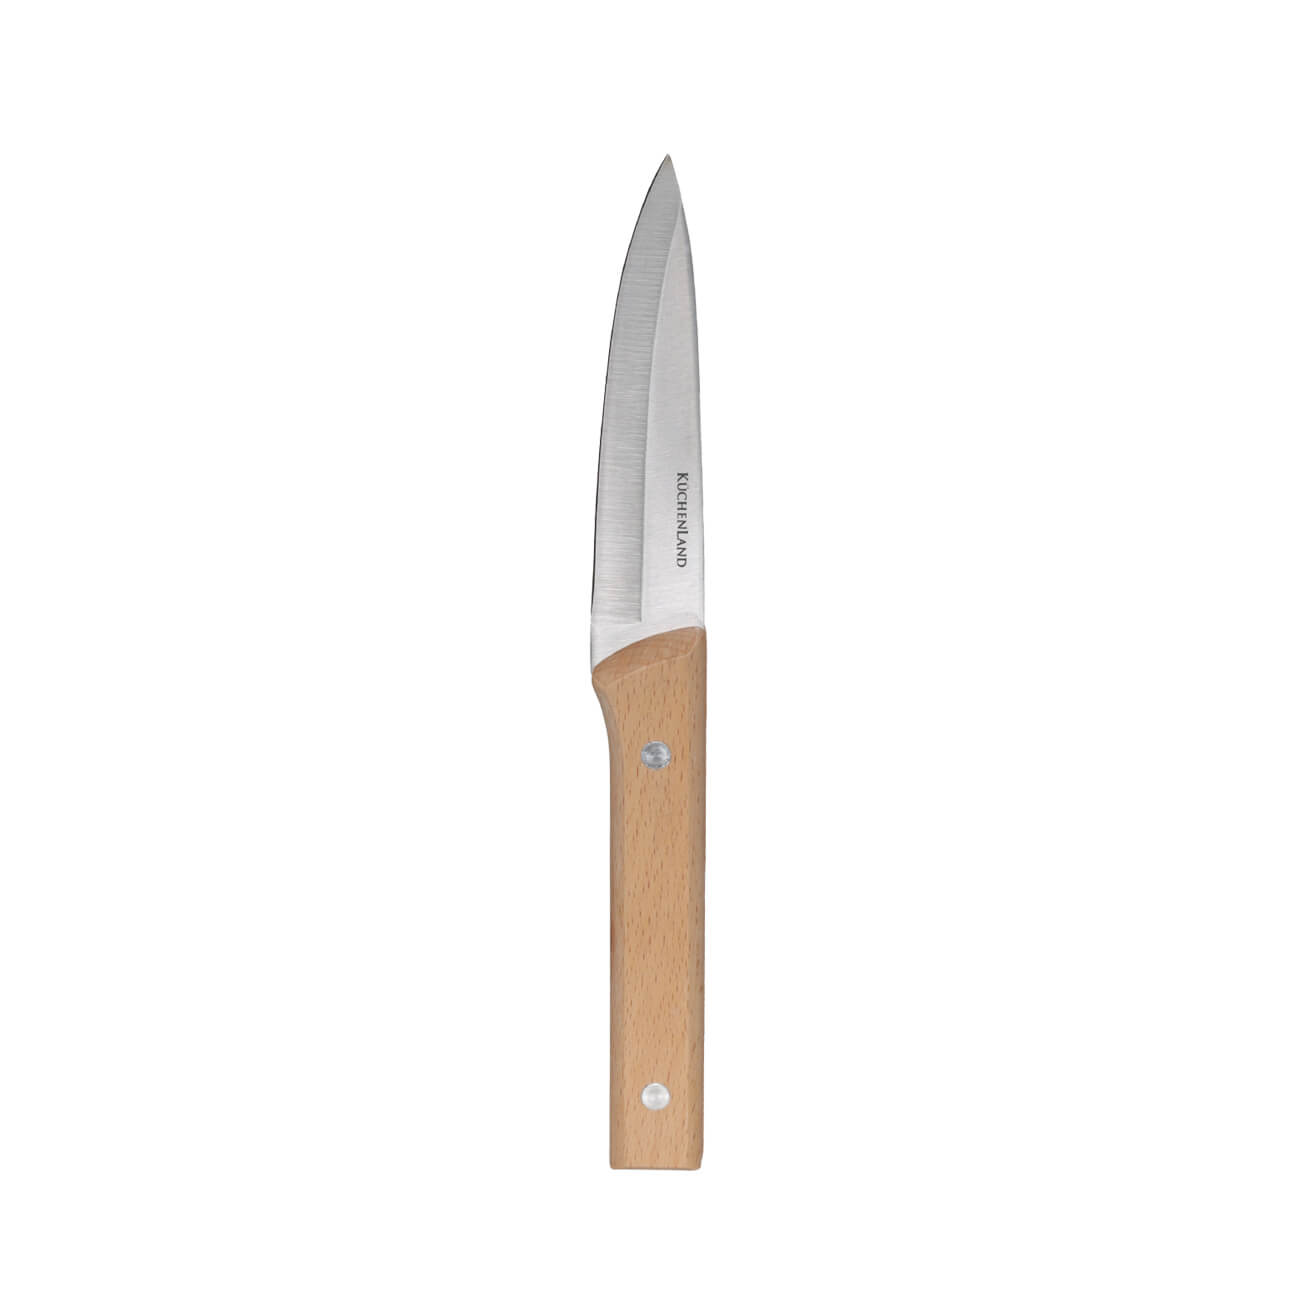 Нож для чистки овощей, 9 см, сталь/дерево, Eco home нож для чистки овощей essential k2210575